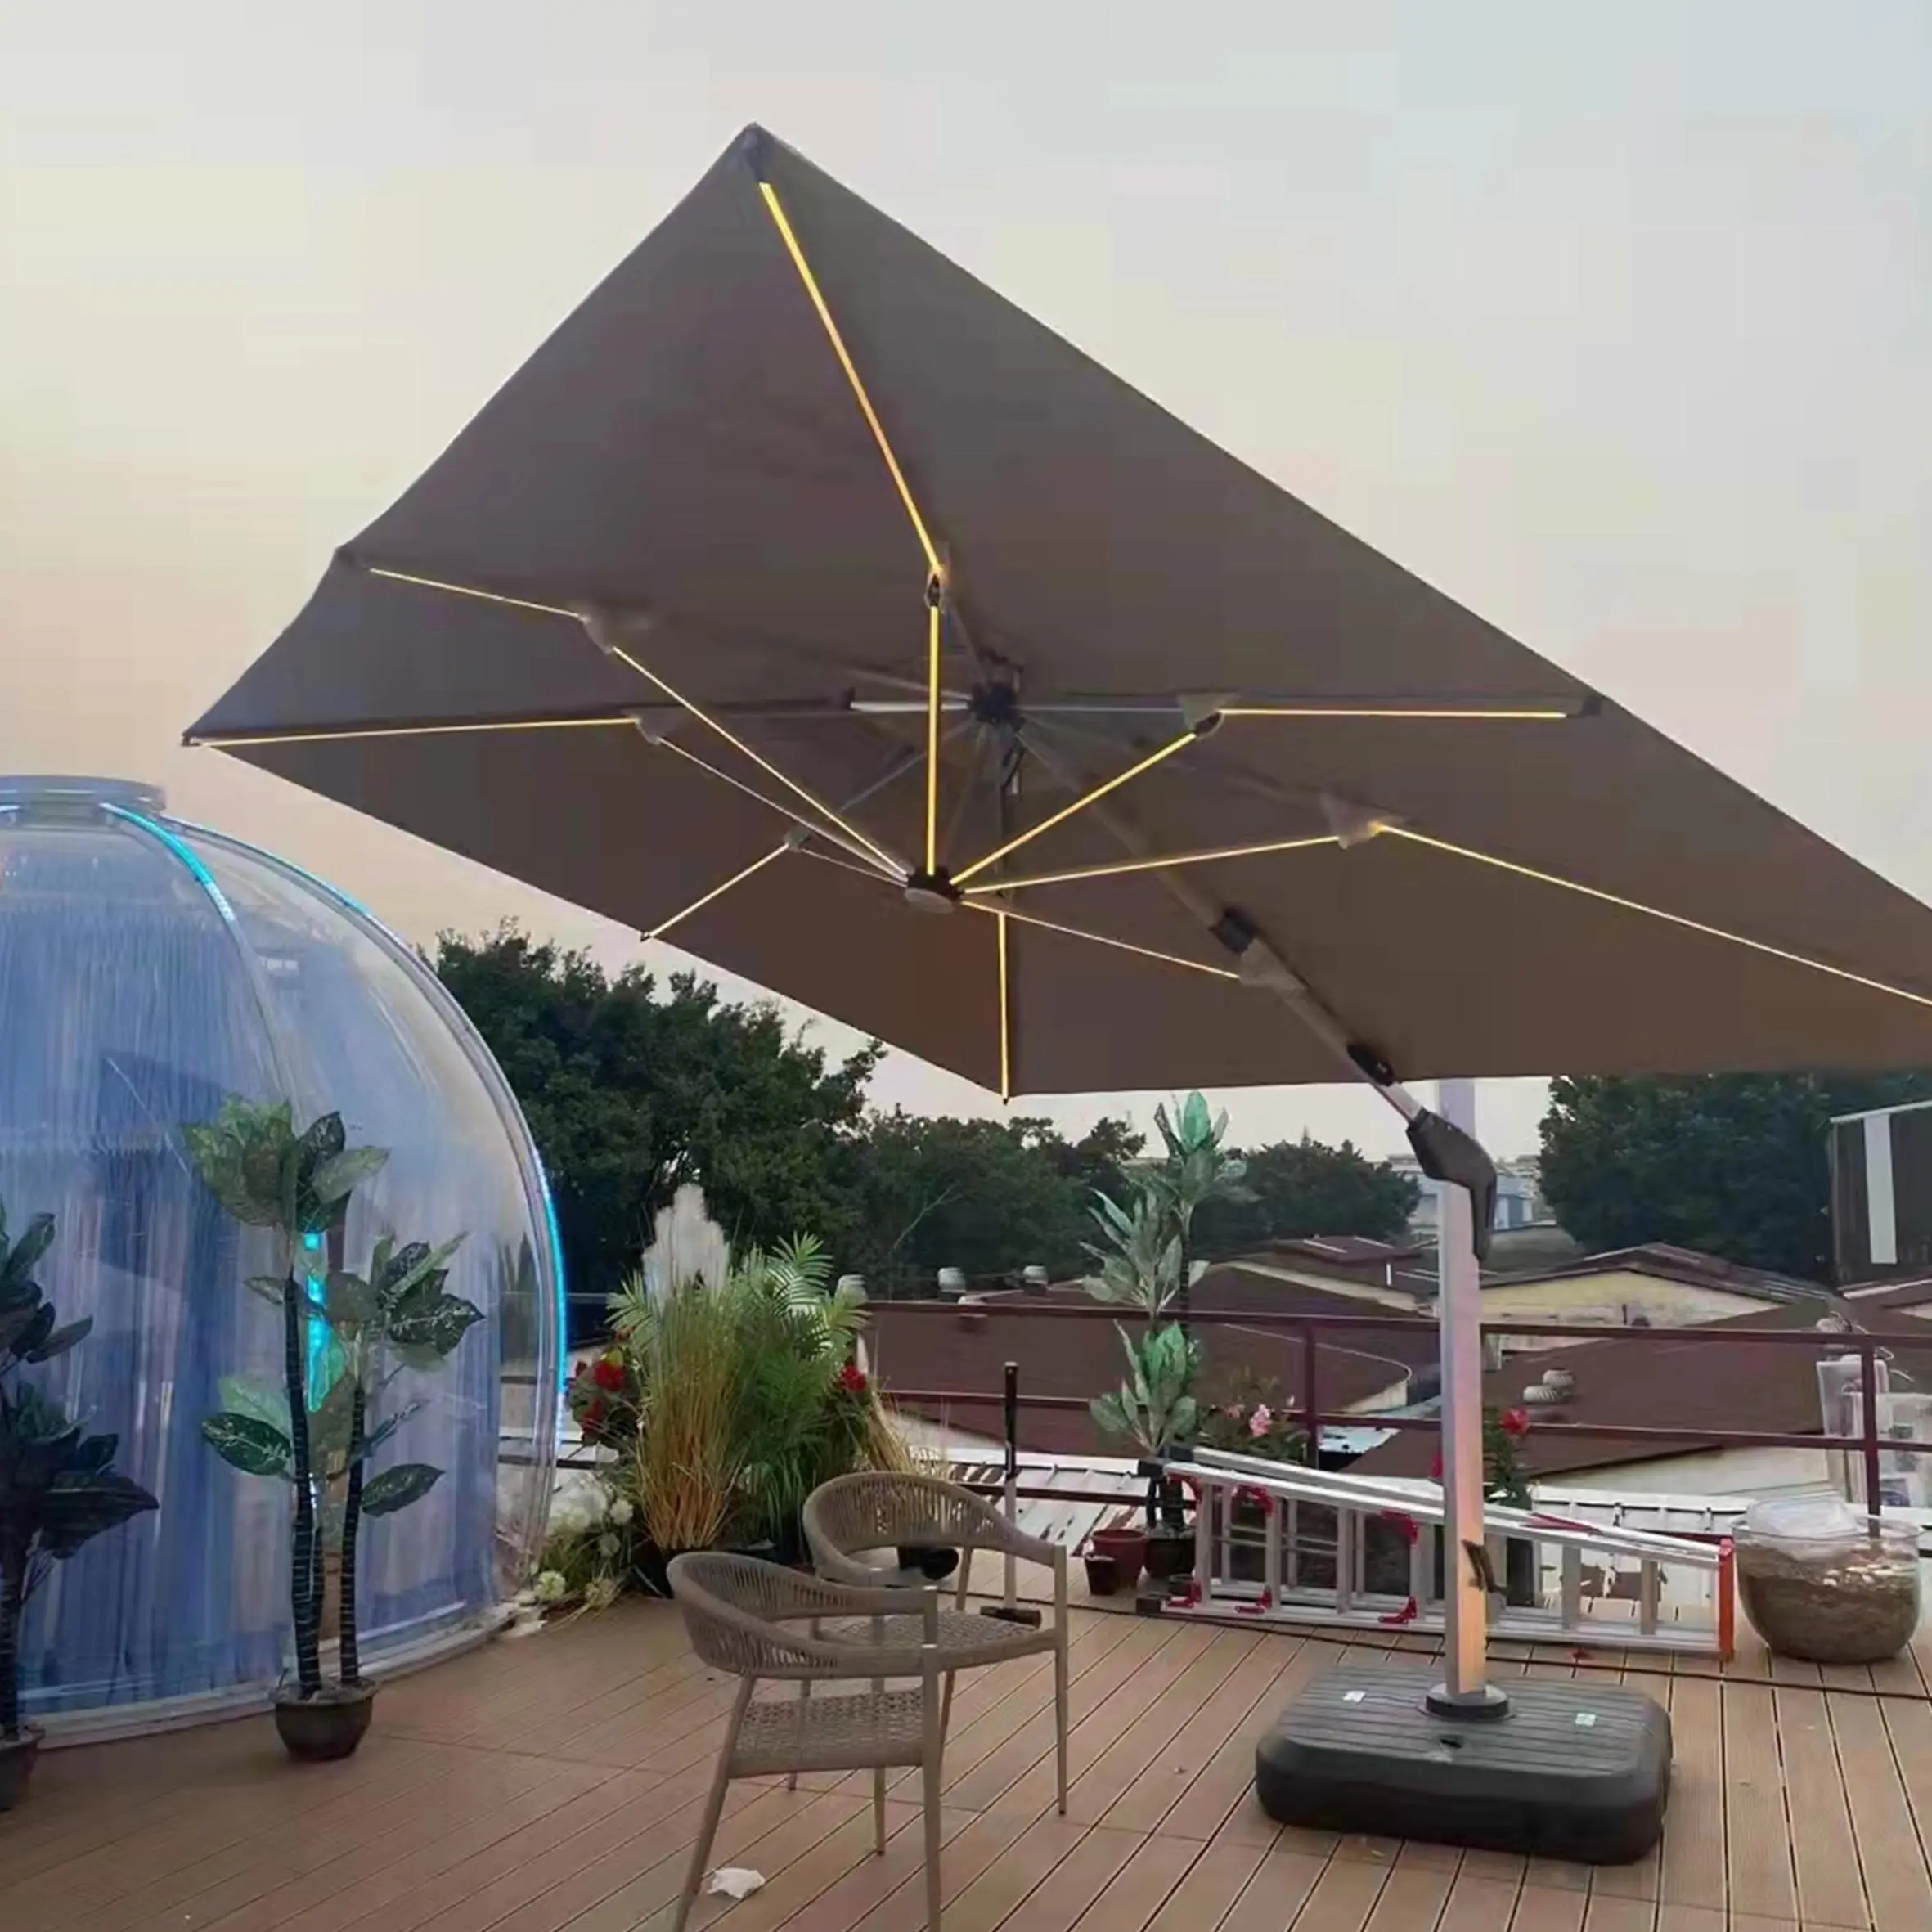 Vendita calda giardino gigante a sbalzo ombrellone ombrellone appeso patio basi ombrellone per patio